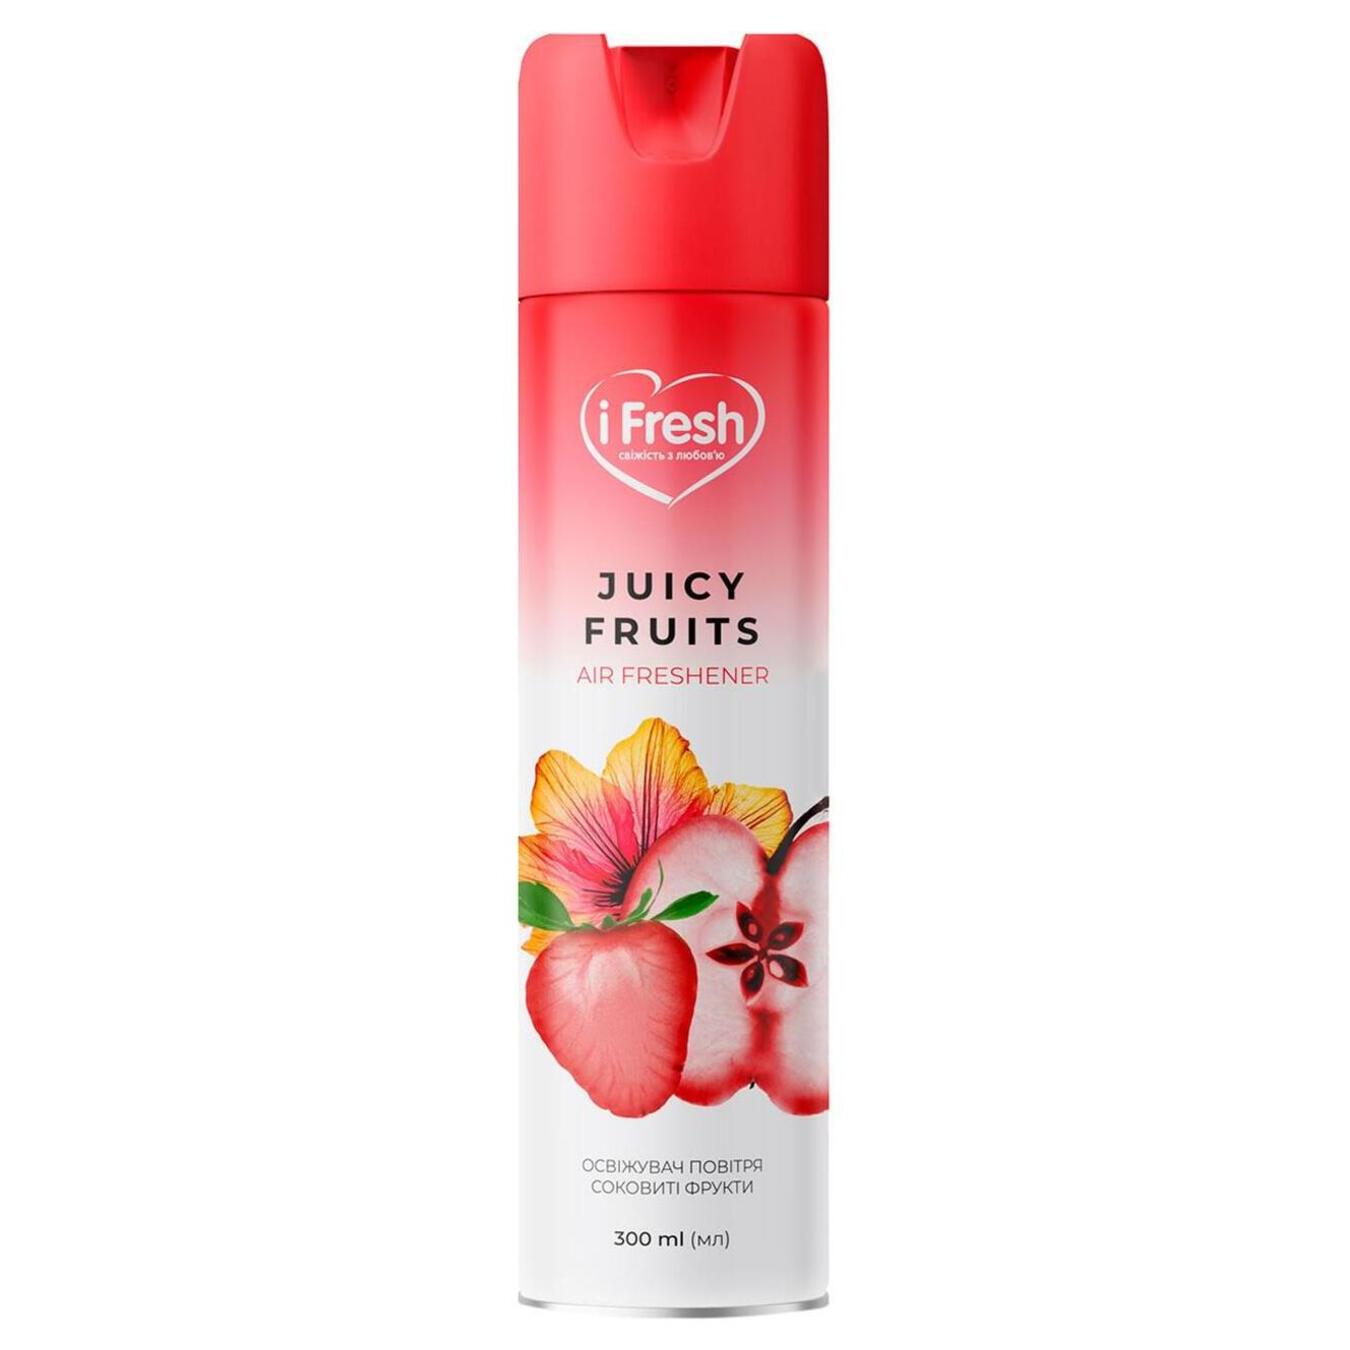 Air freshener iFresh Juicy fruits 300ml